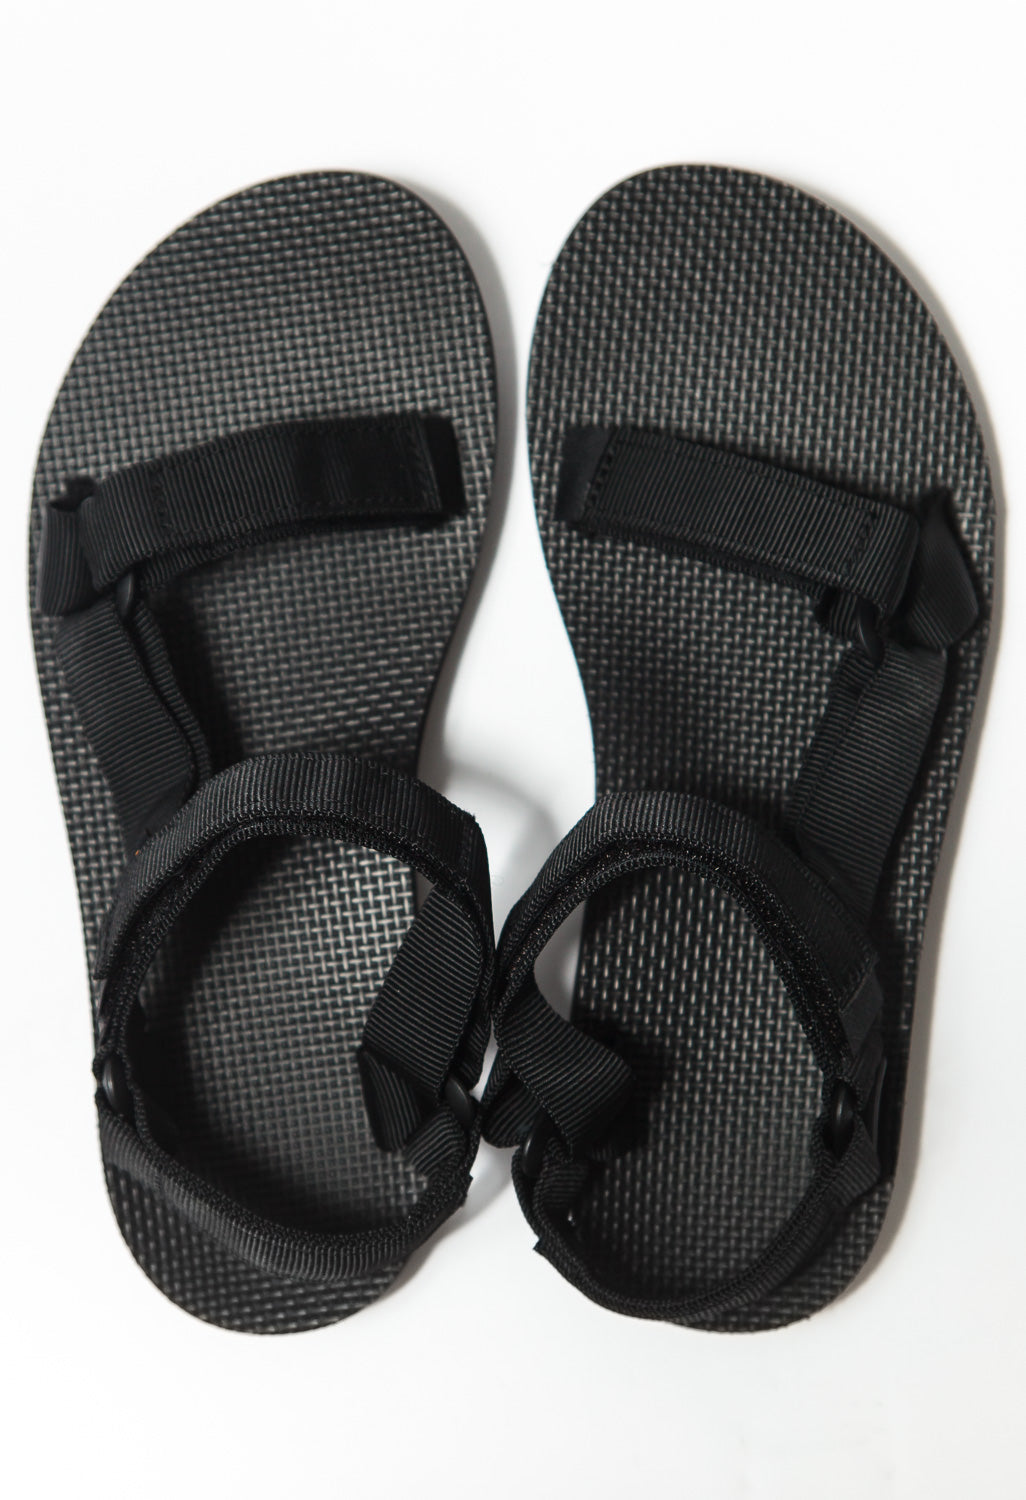 Teva Original Universal Women's Sandals - Black